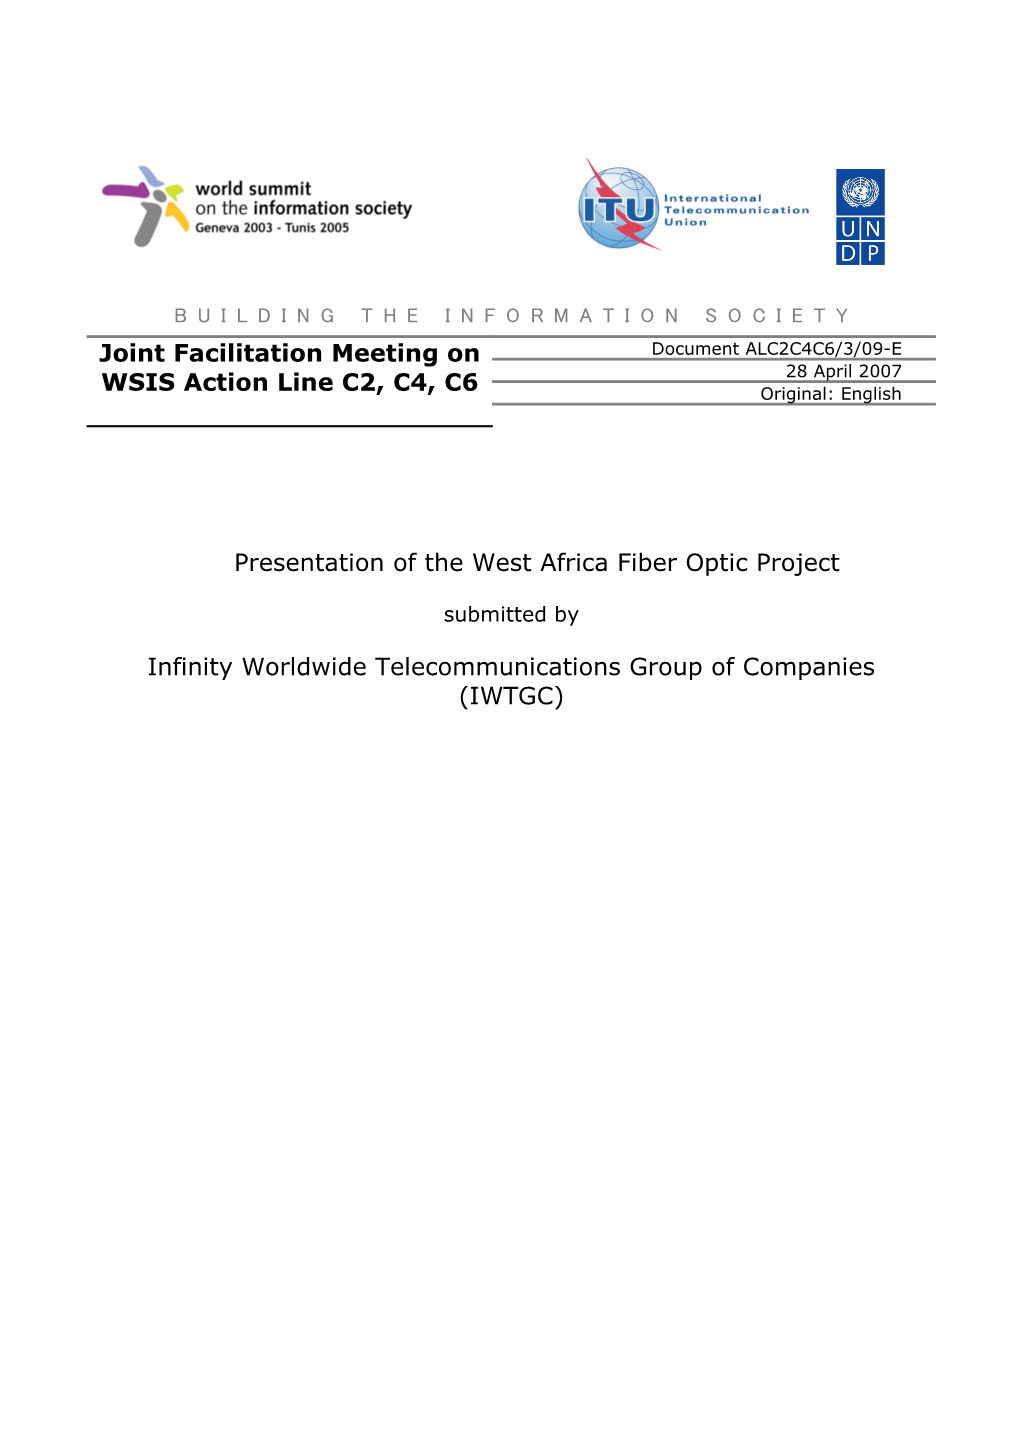 Infinity Worldwide Telecommunications Group of Companies (IWTGC)